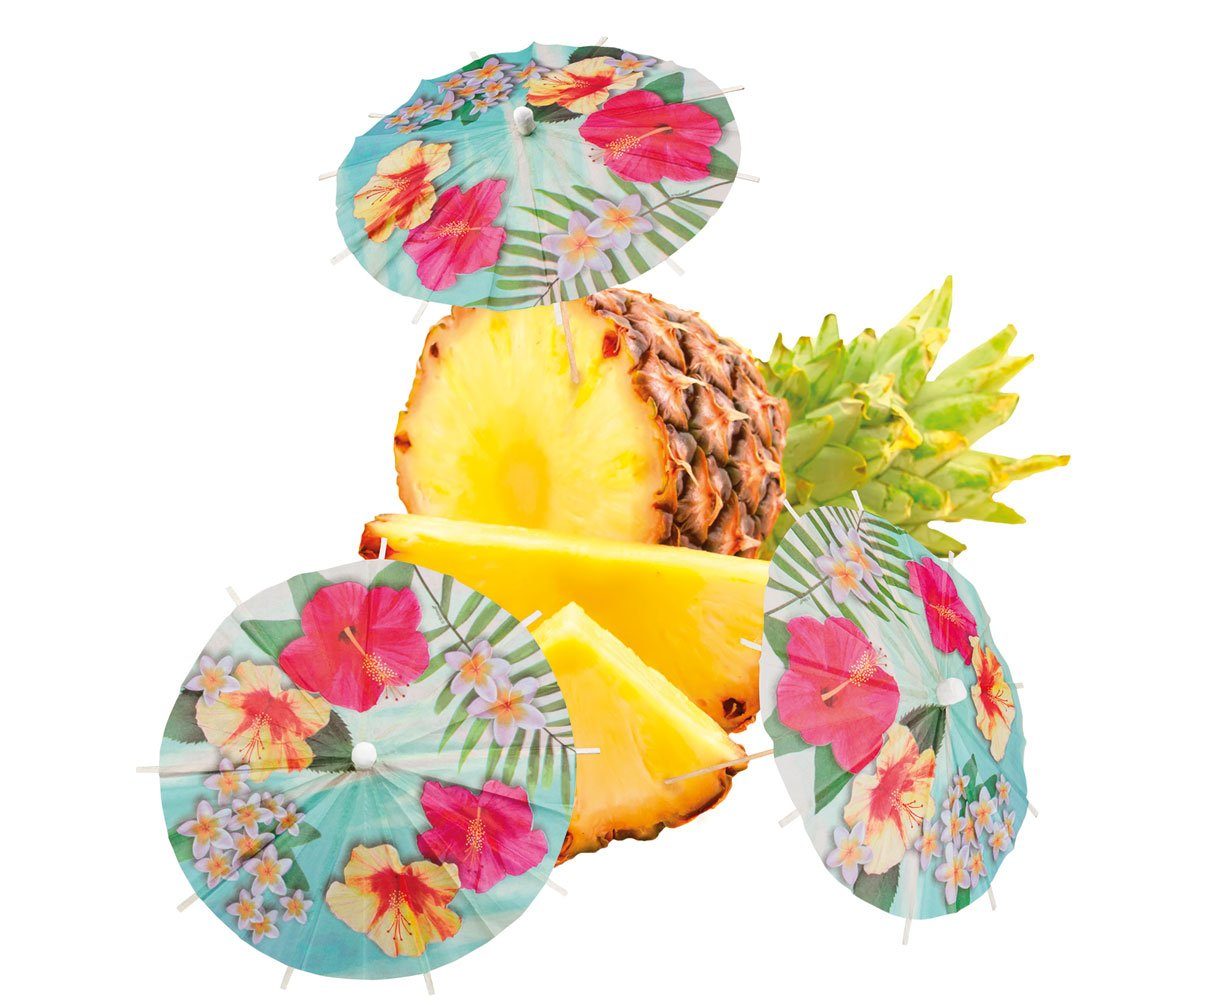 Set Einweggeschirr-Set Teile Hawaii Partygeschirr 30 + Pappbecher Hibiskus Pappteller Wimpelkette, Party Karneval-Klamotten Servietten